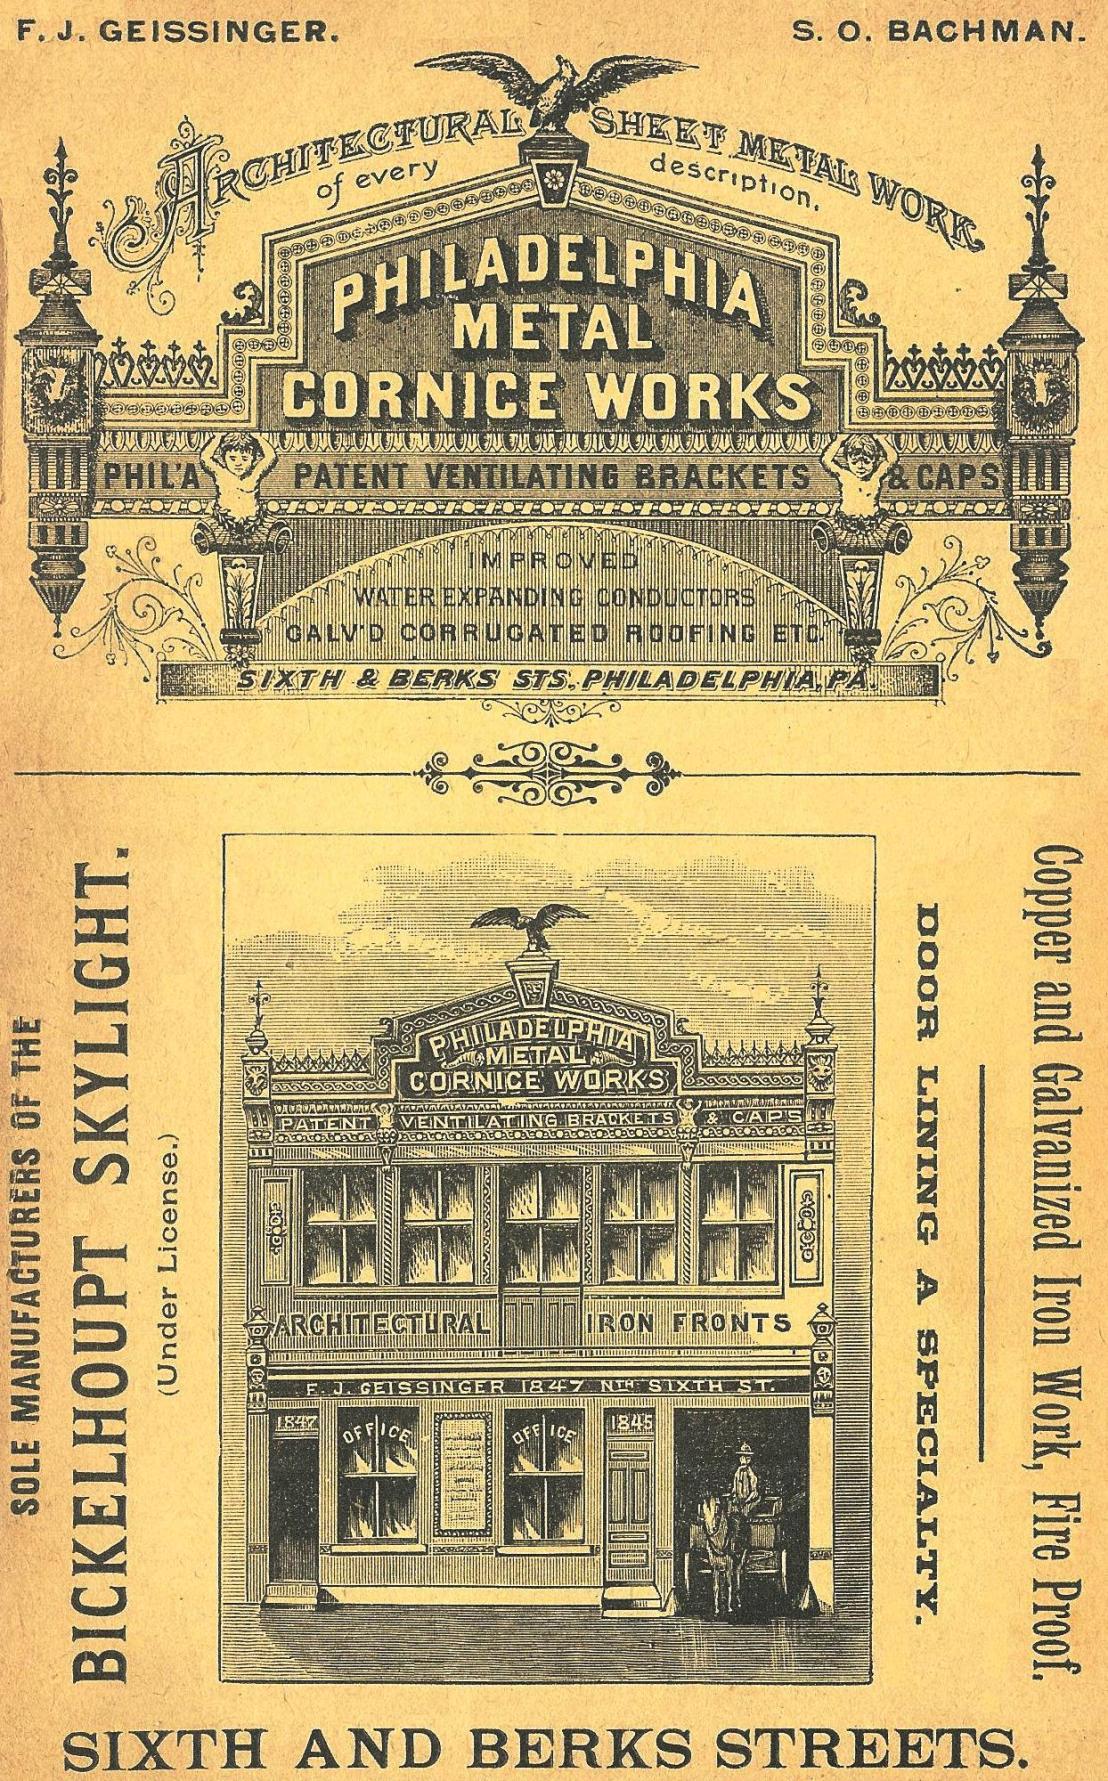 FJ Geissinger, Phila Metal Cornice Works, Bickelhoupt Skylight 1847 6n at Berks 1890 CD.jpg